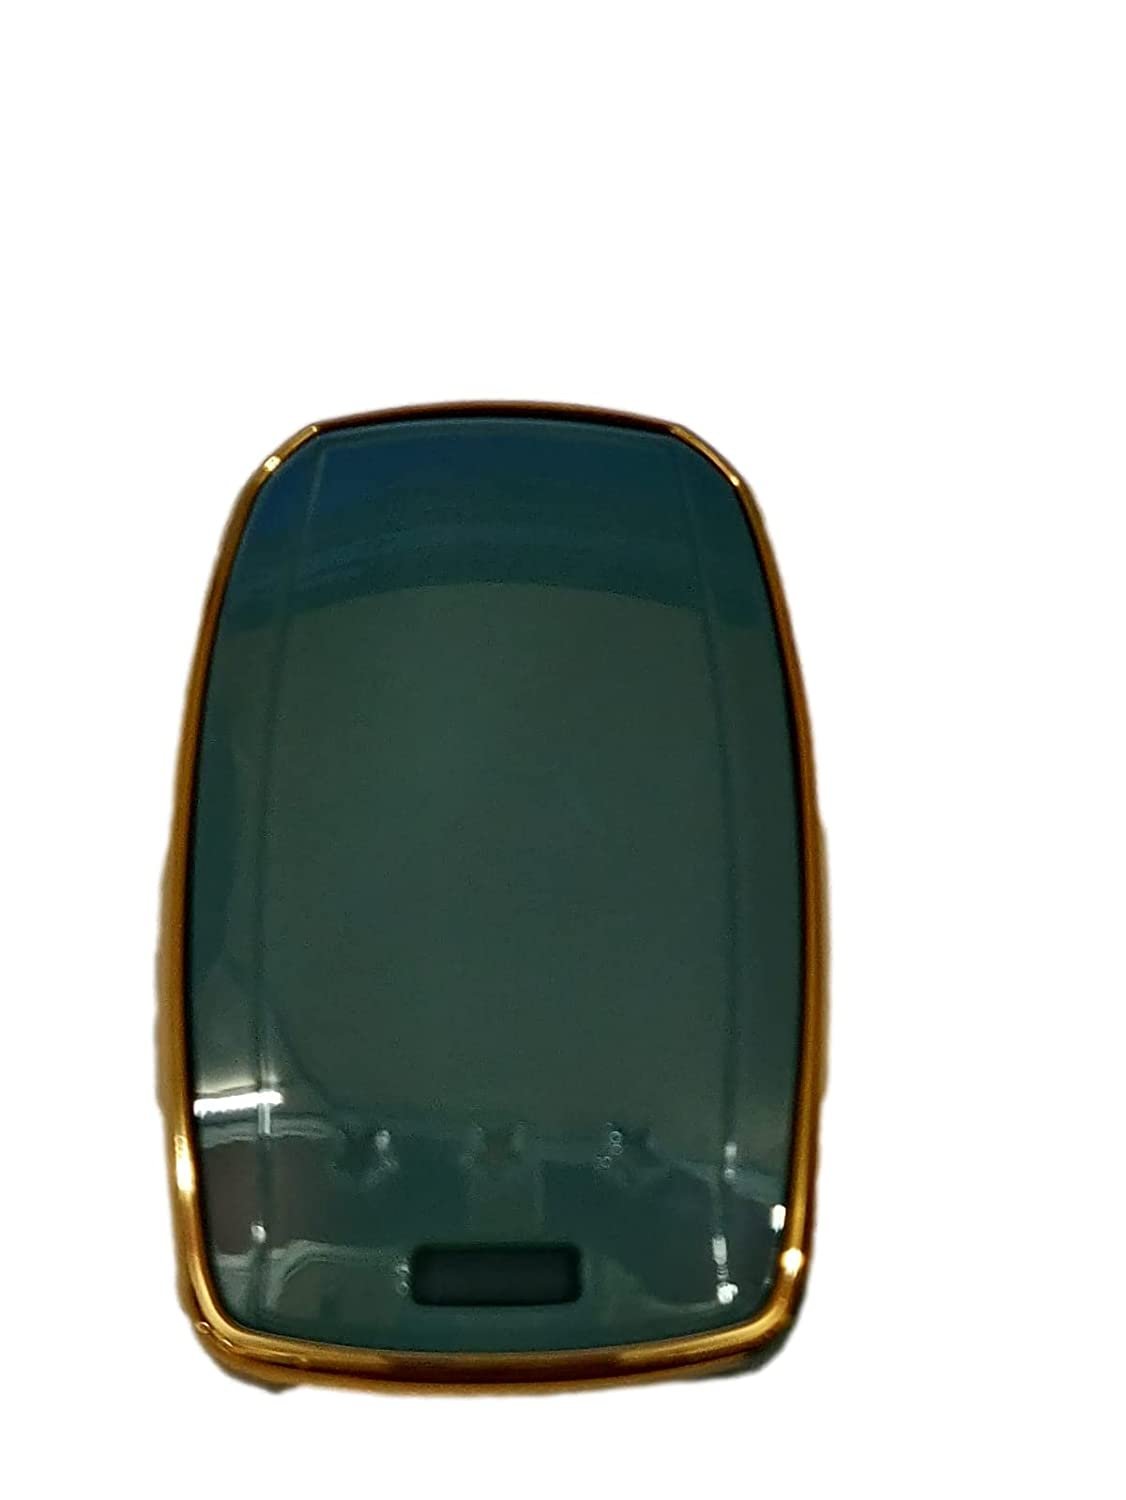 TPU Carbon Fiber Style Car Key Cover Compatible with Kia Seltos Sonet 3 Button Smart Key (Grey)